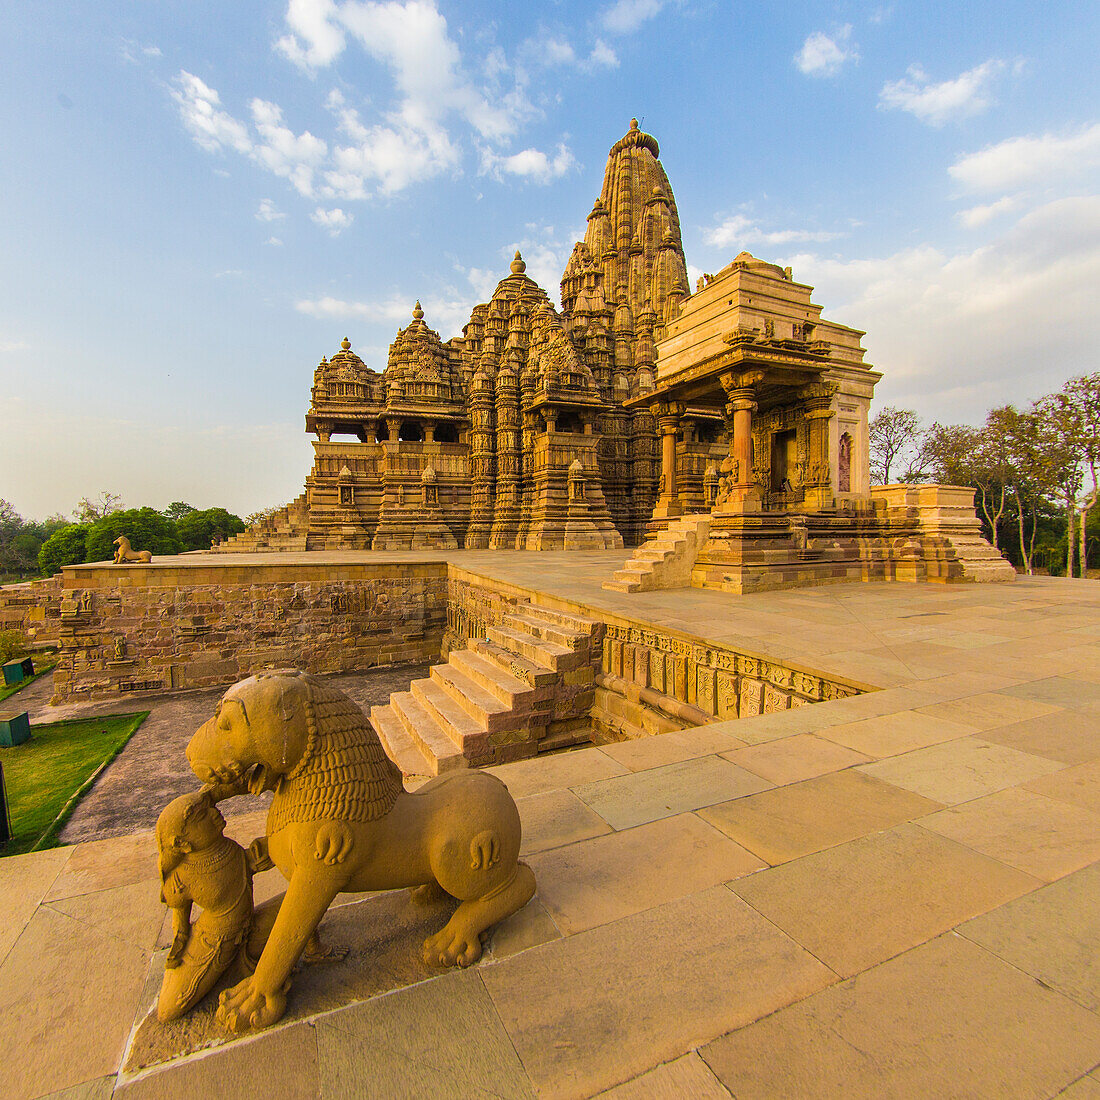 Indien. Hinduistische Tempel in Khajuraho, UNESCO-Weltkulturerbe, berühmt für ihre erotischen Schnitzereien.